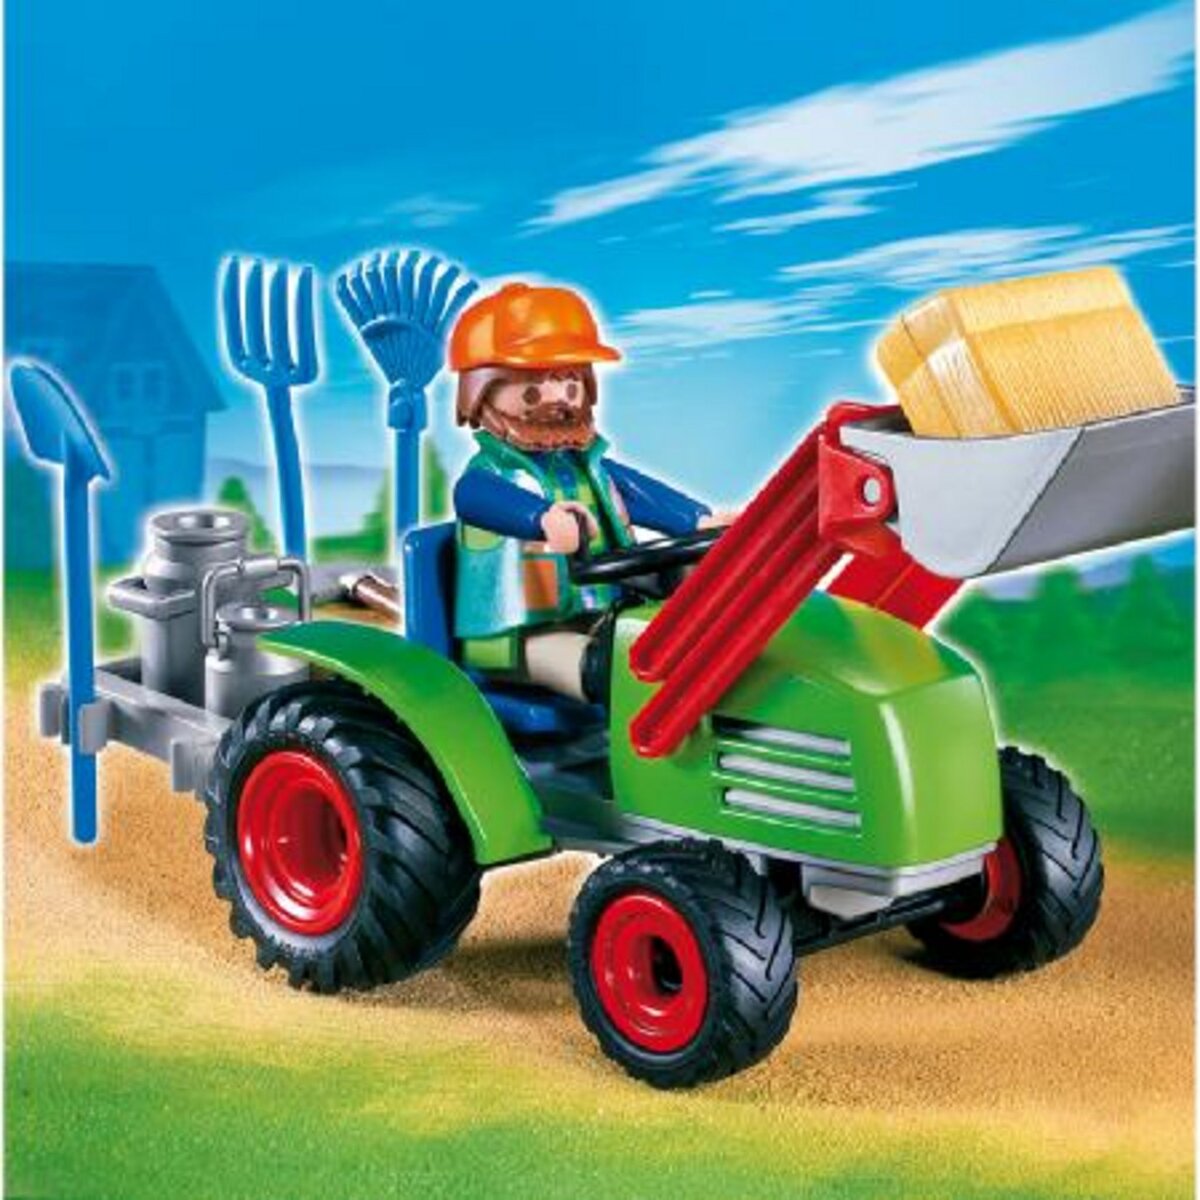 PLAYMOBIL 4143 - Country - Agriculteur avec tracteur